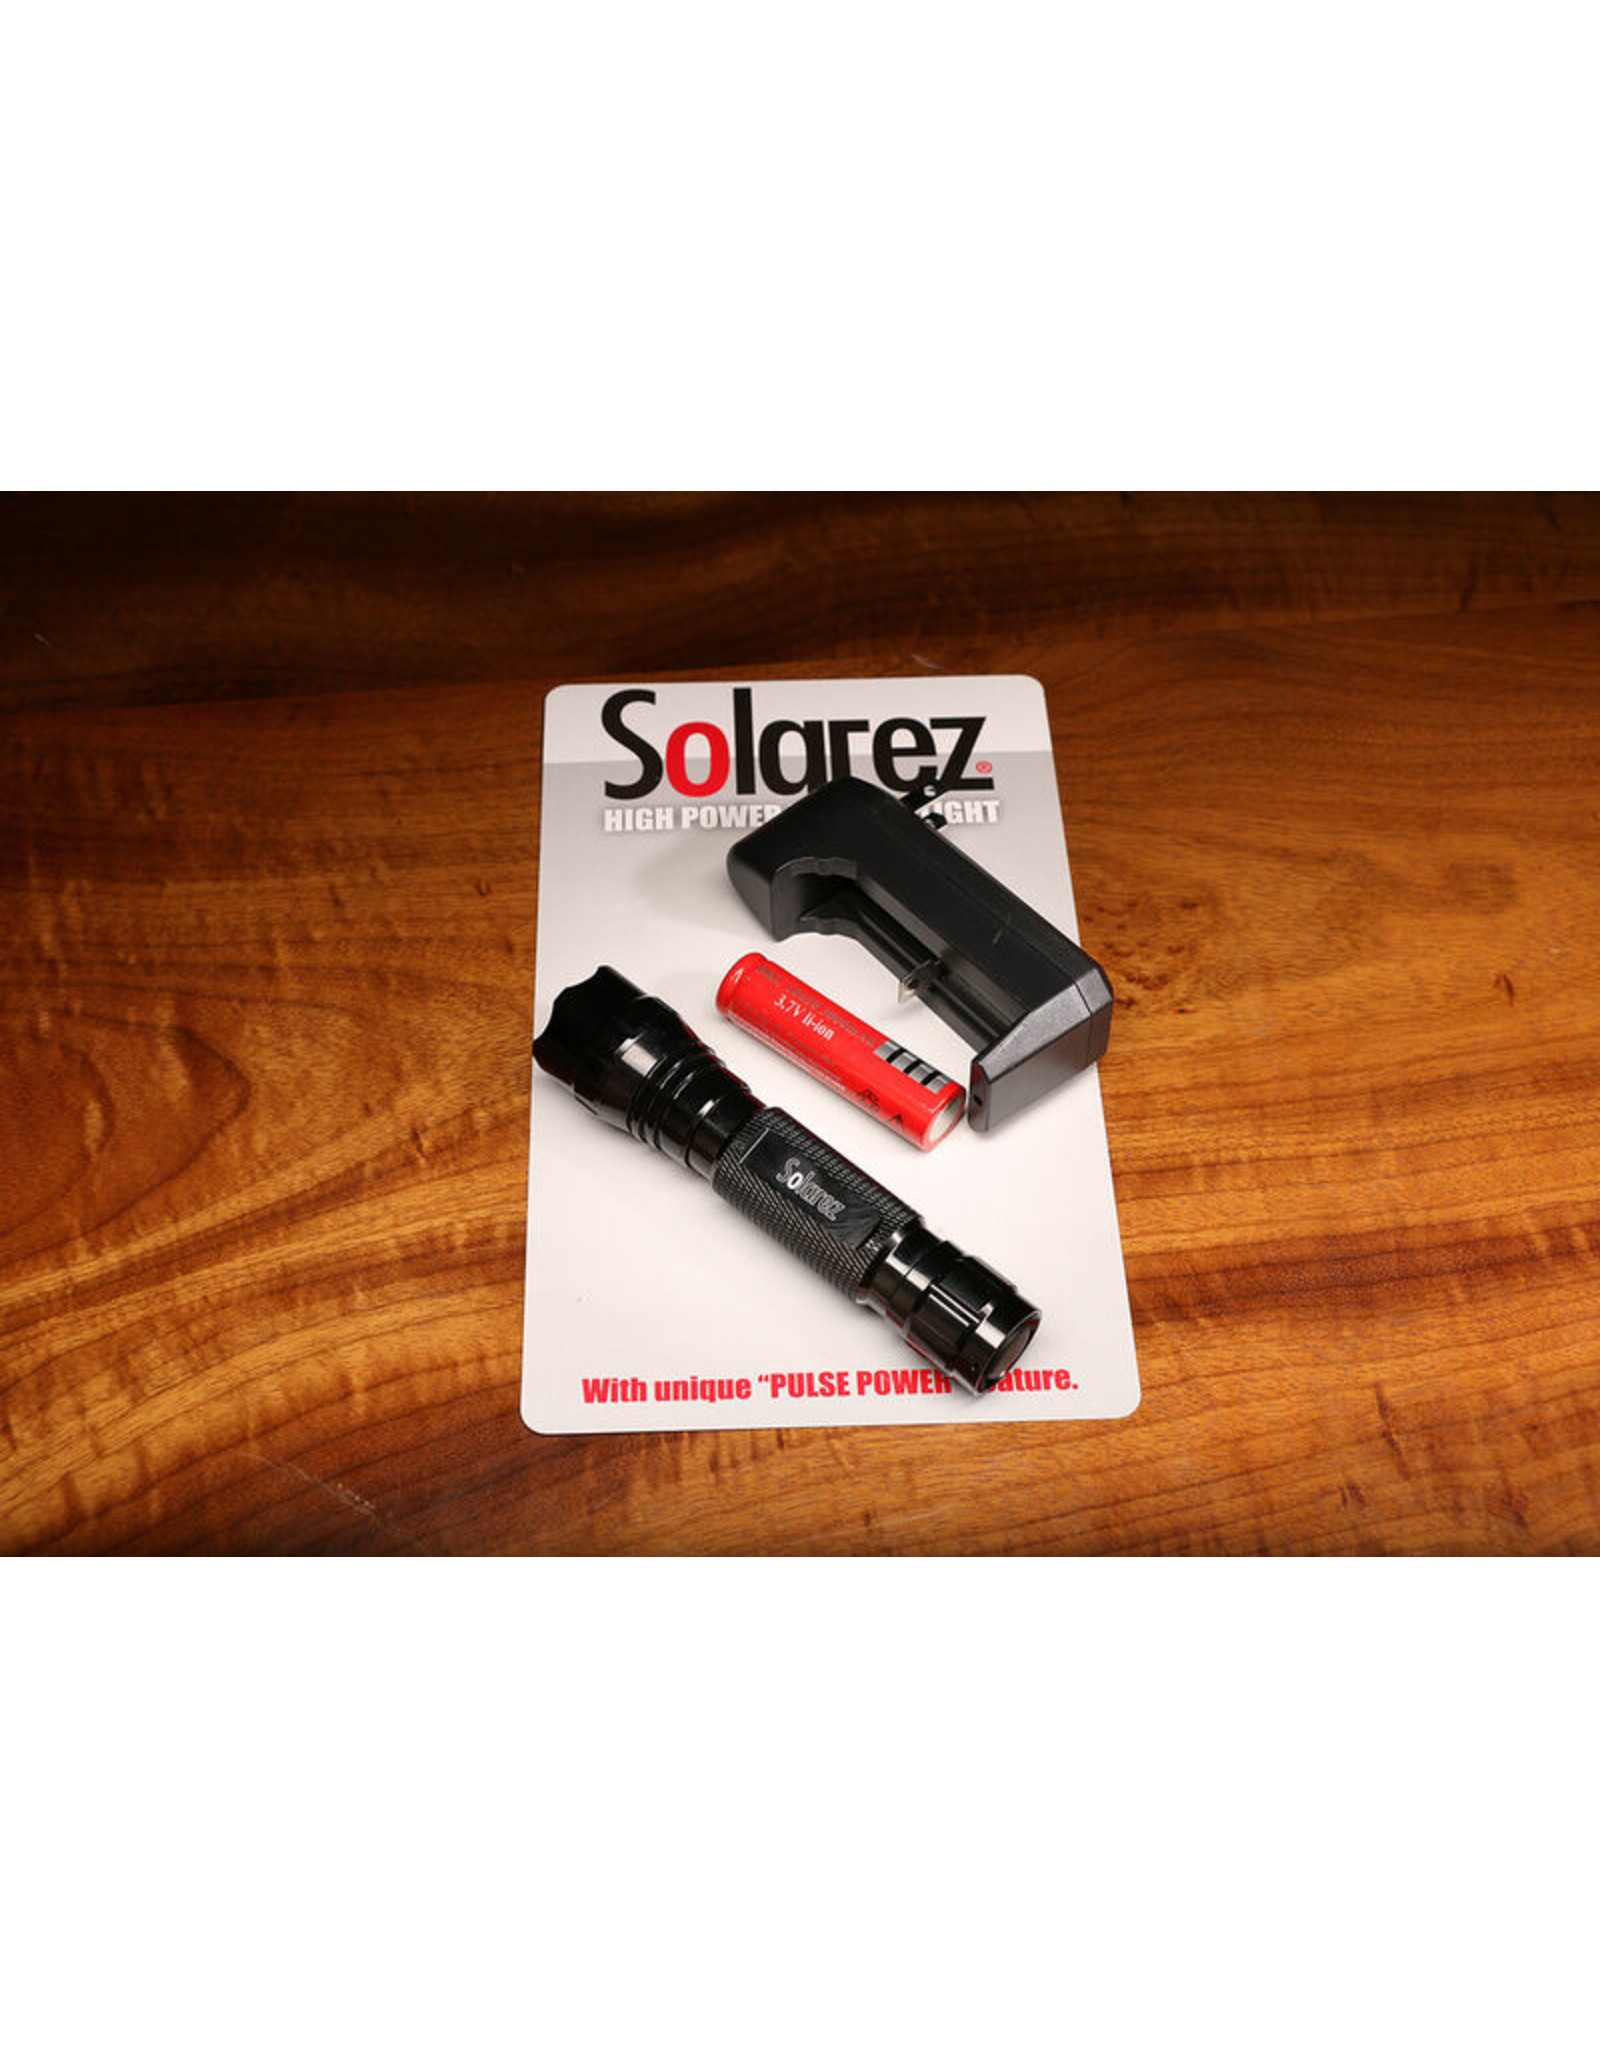 SOLAREZ Solarez High Output UVa Flashlight With Battery and Charger Resinator Kit